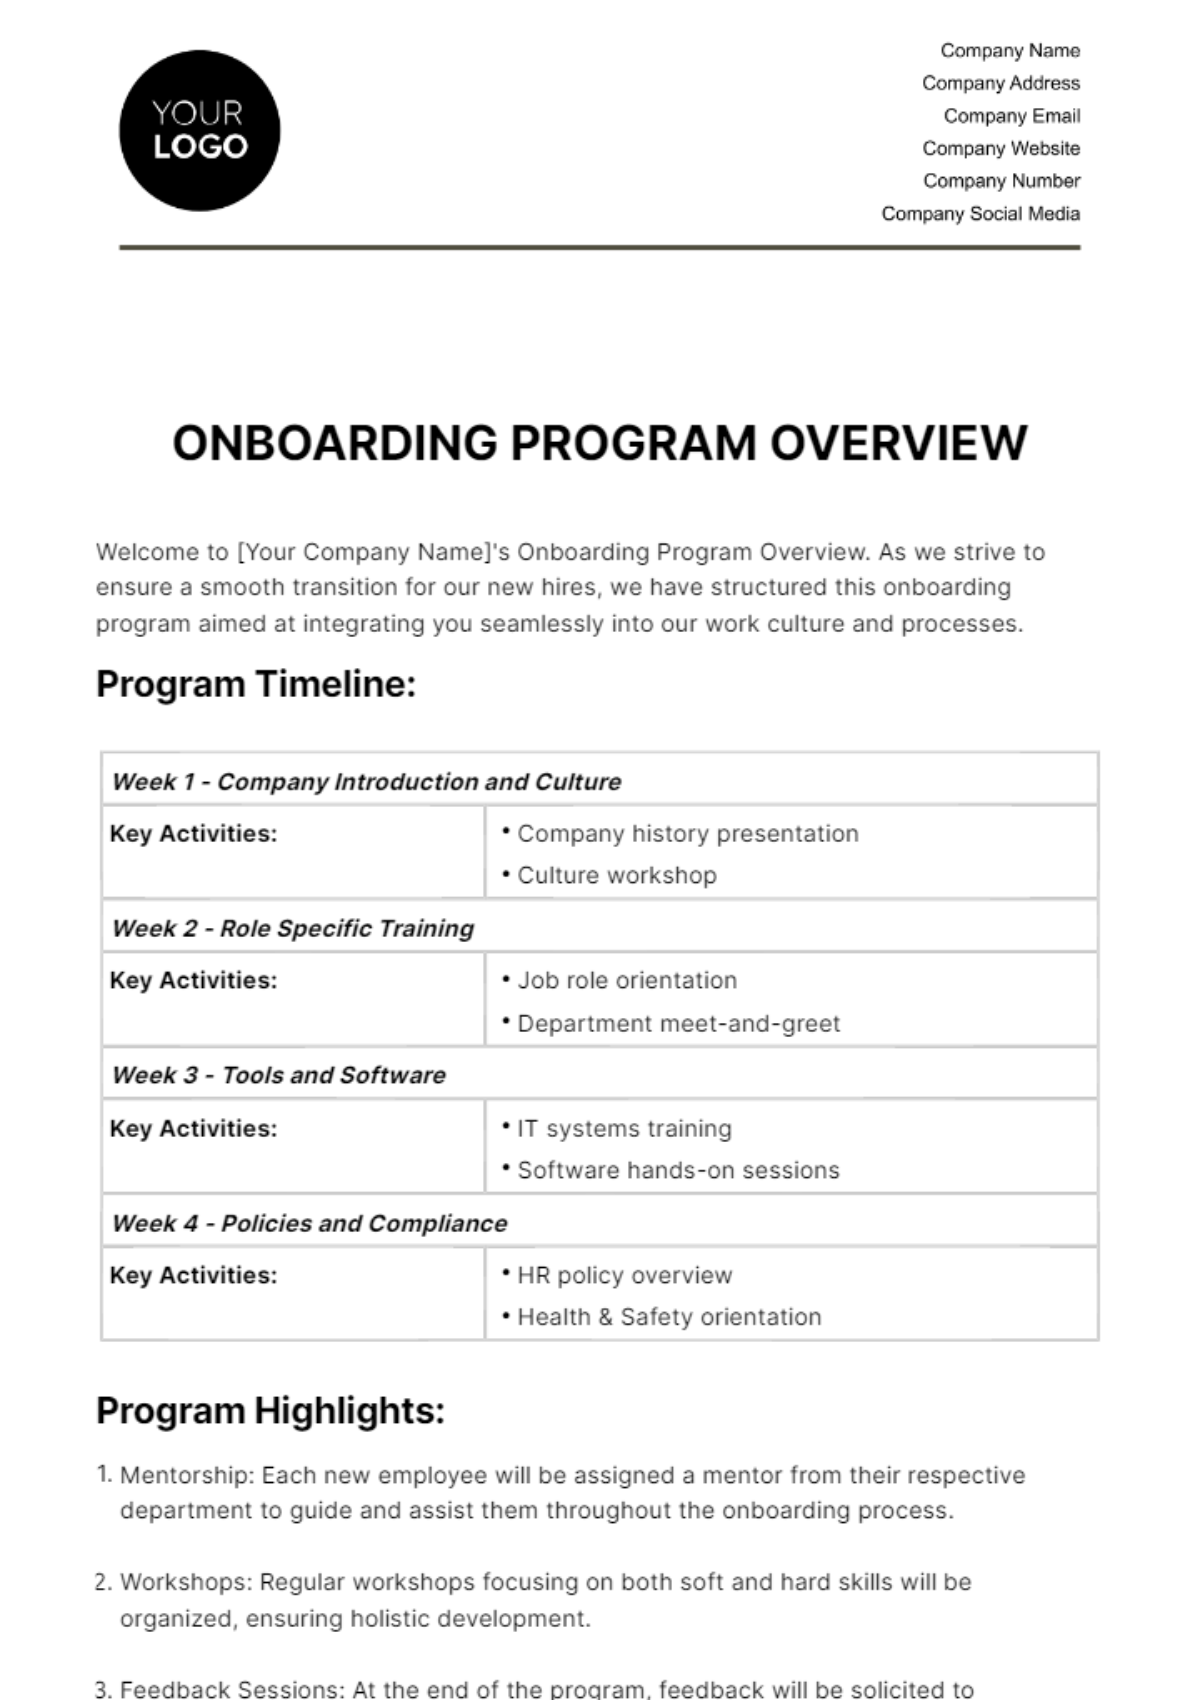 Onboarding Program Overview HR Template